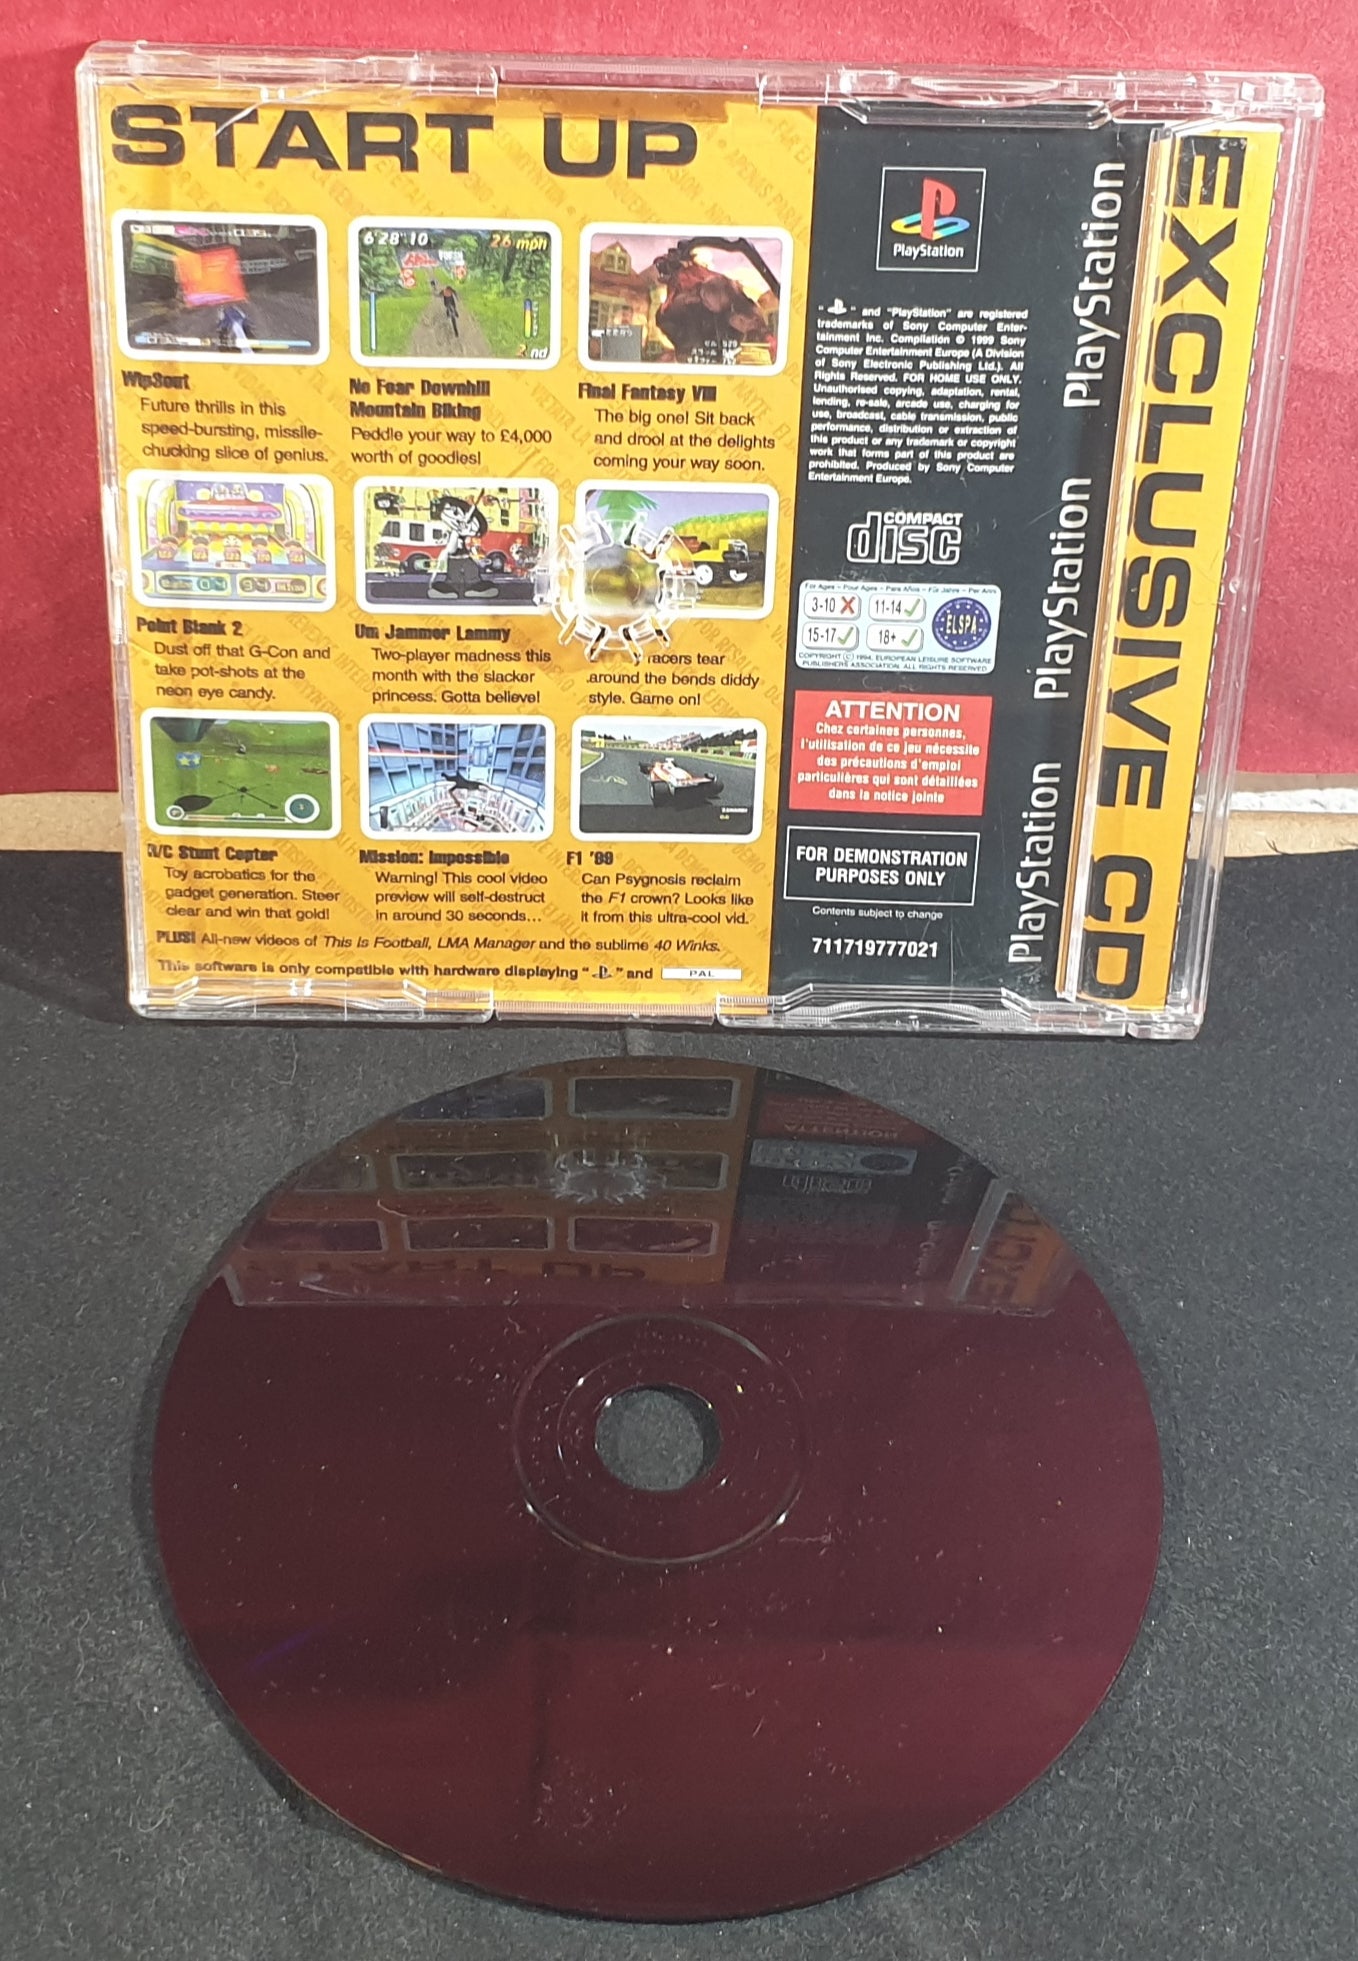 Sony Playstation 1 (PS1) Magazine Demo Disc 50